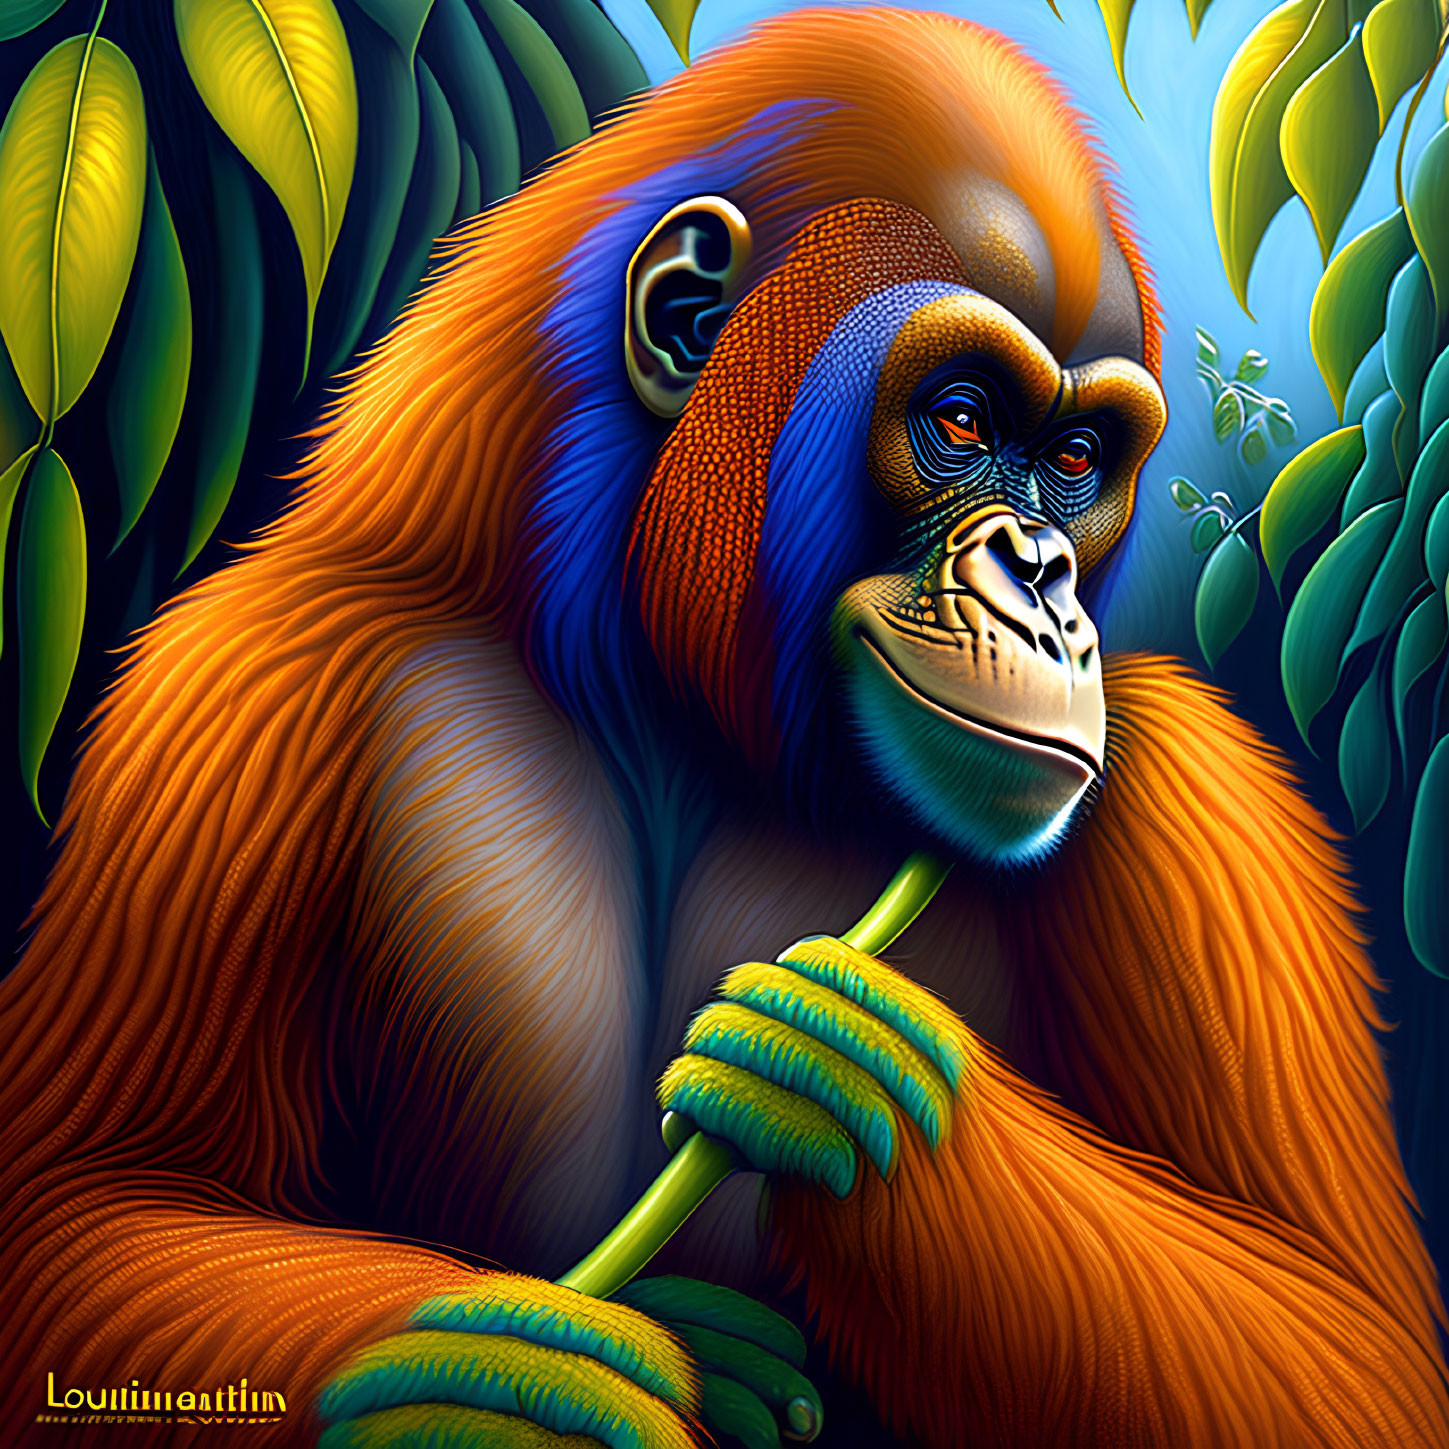 Colorful illustration of an orange and blue orangutan in a lush jungle setting